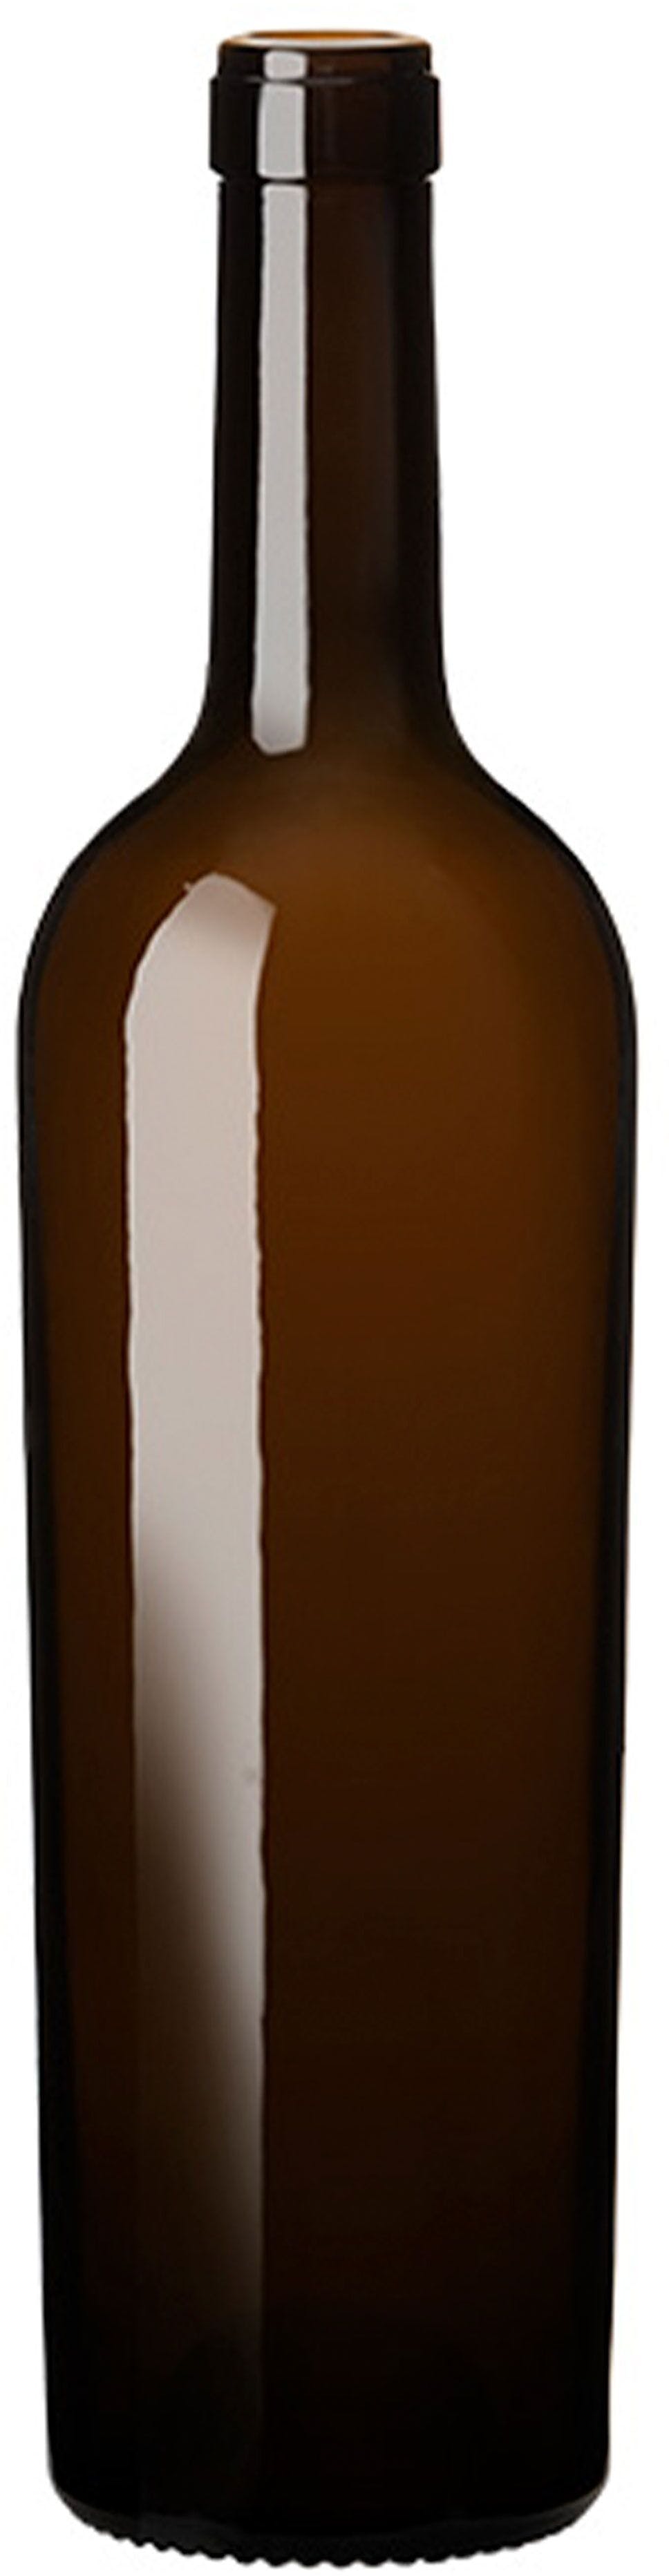 Bottle BORD 750 VINTAGE C313 S VG